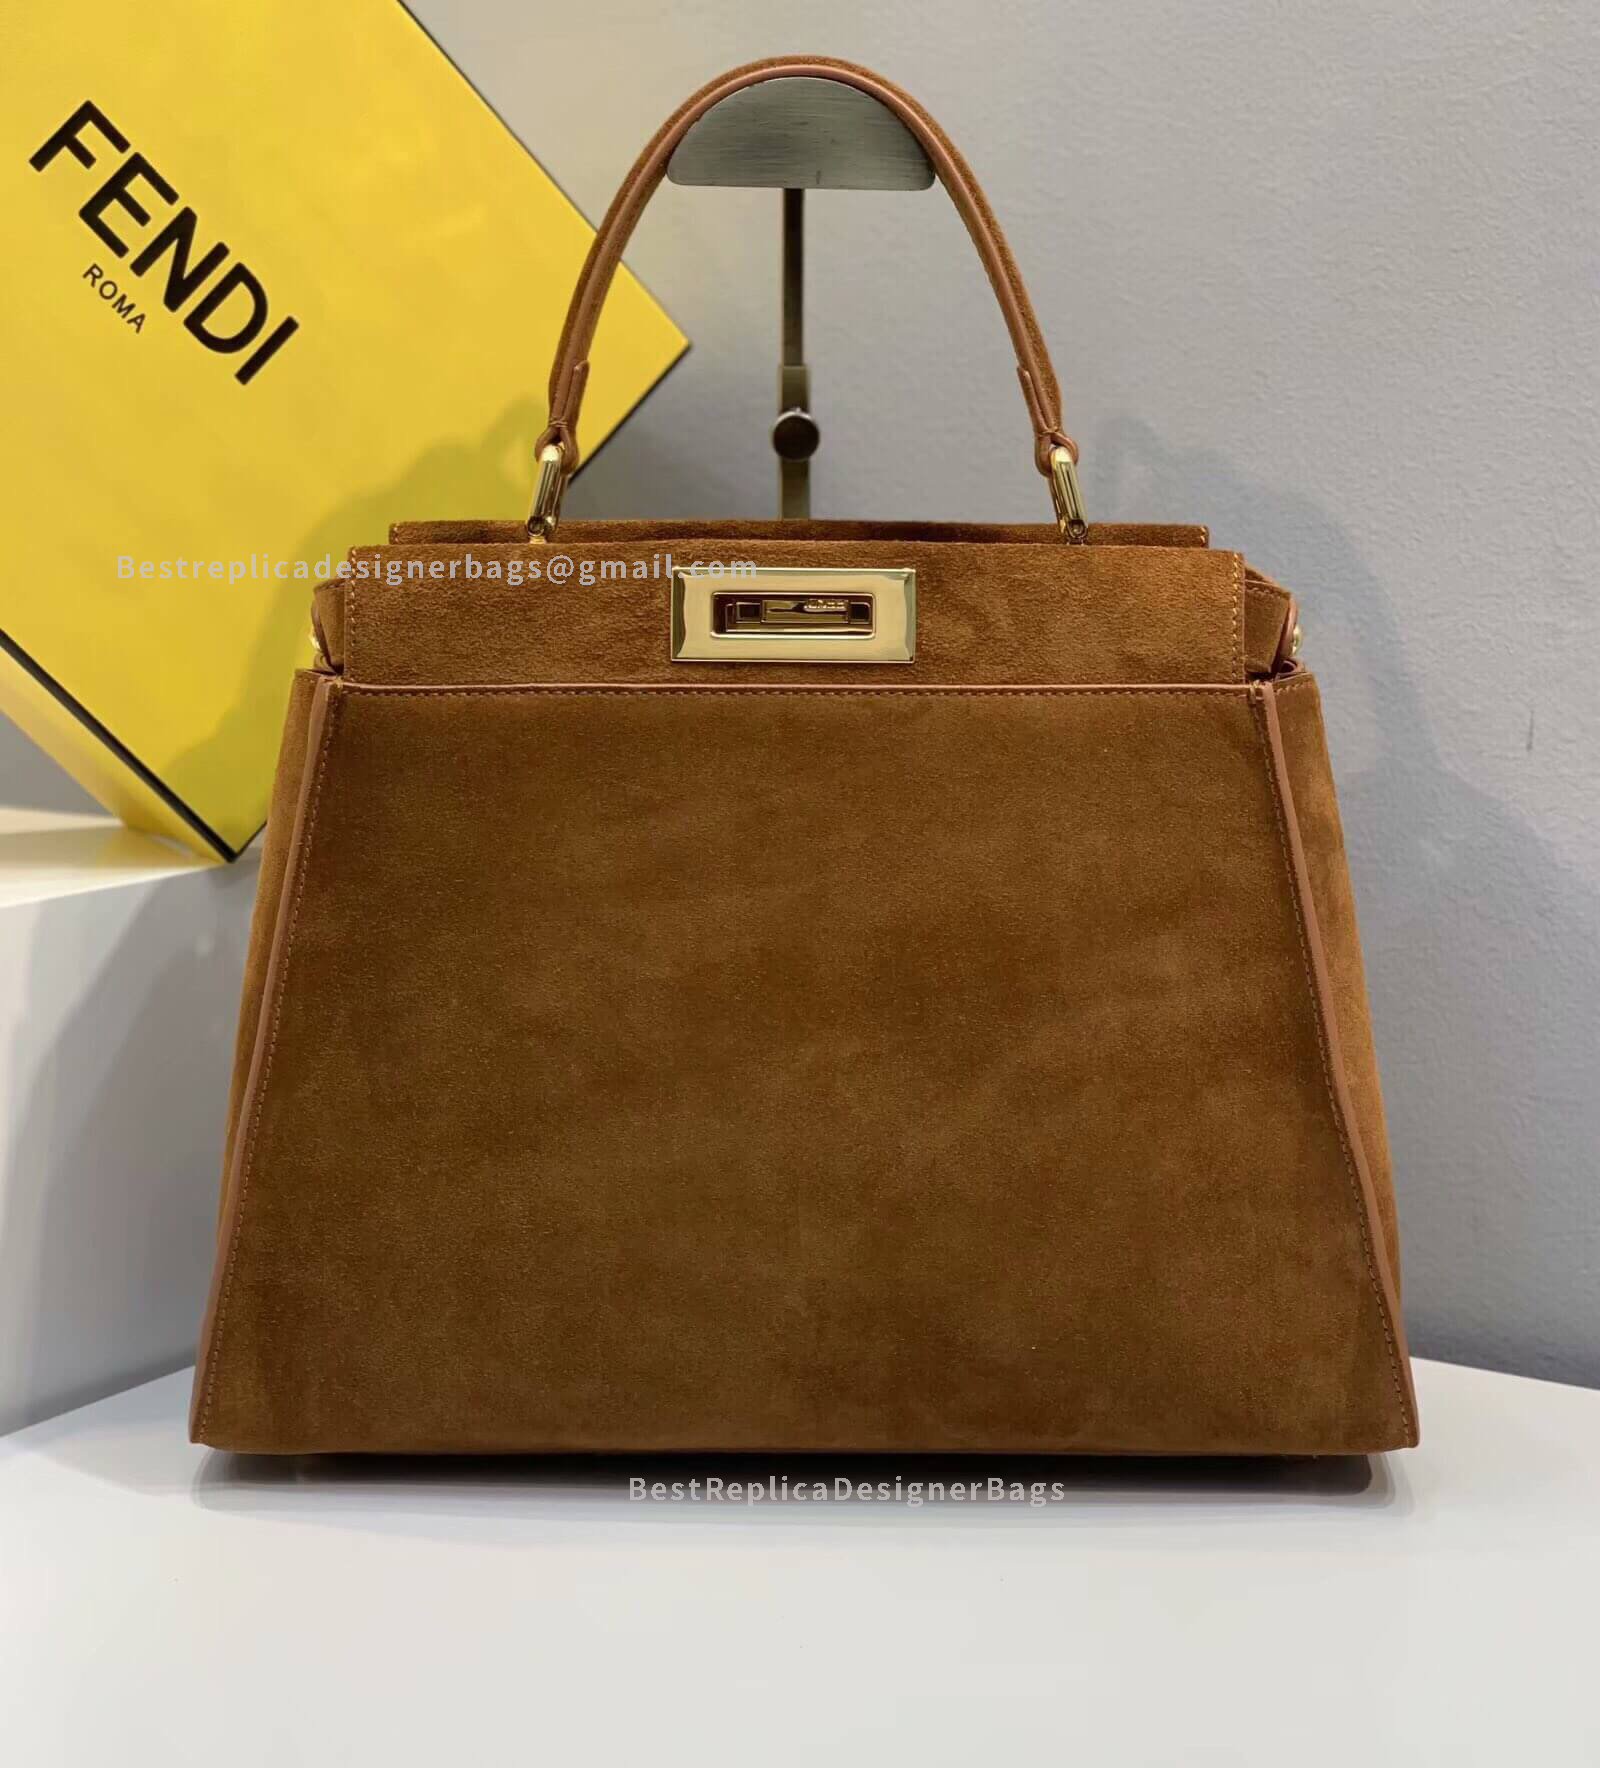 Fendi Peekaboo Iconic Medium Brown Suede Bag 2113BL - Best Fendi Replica